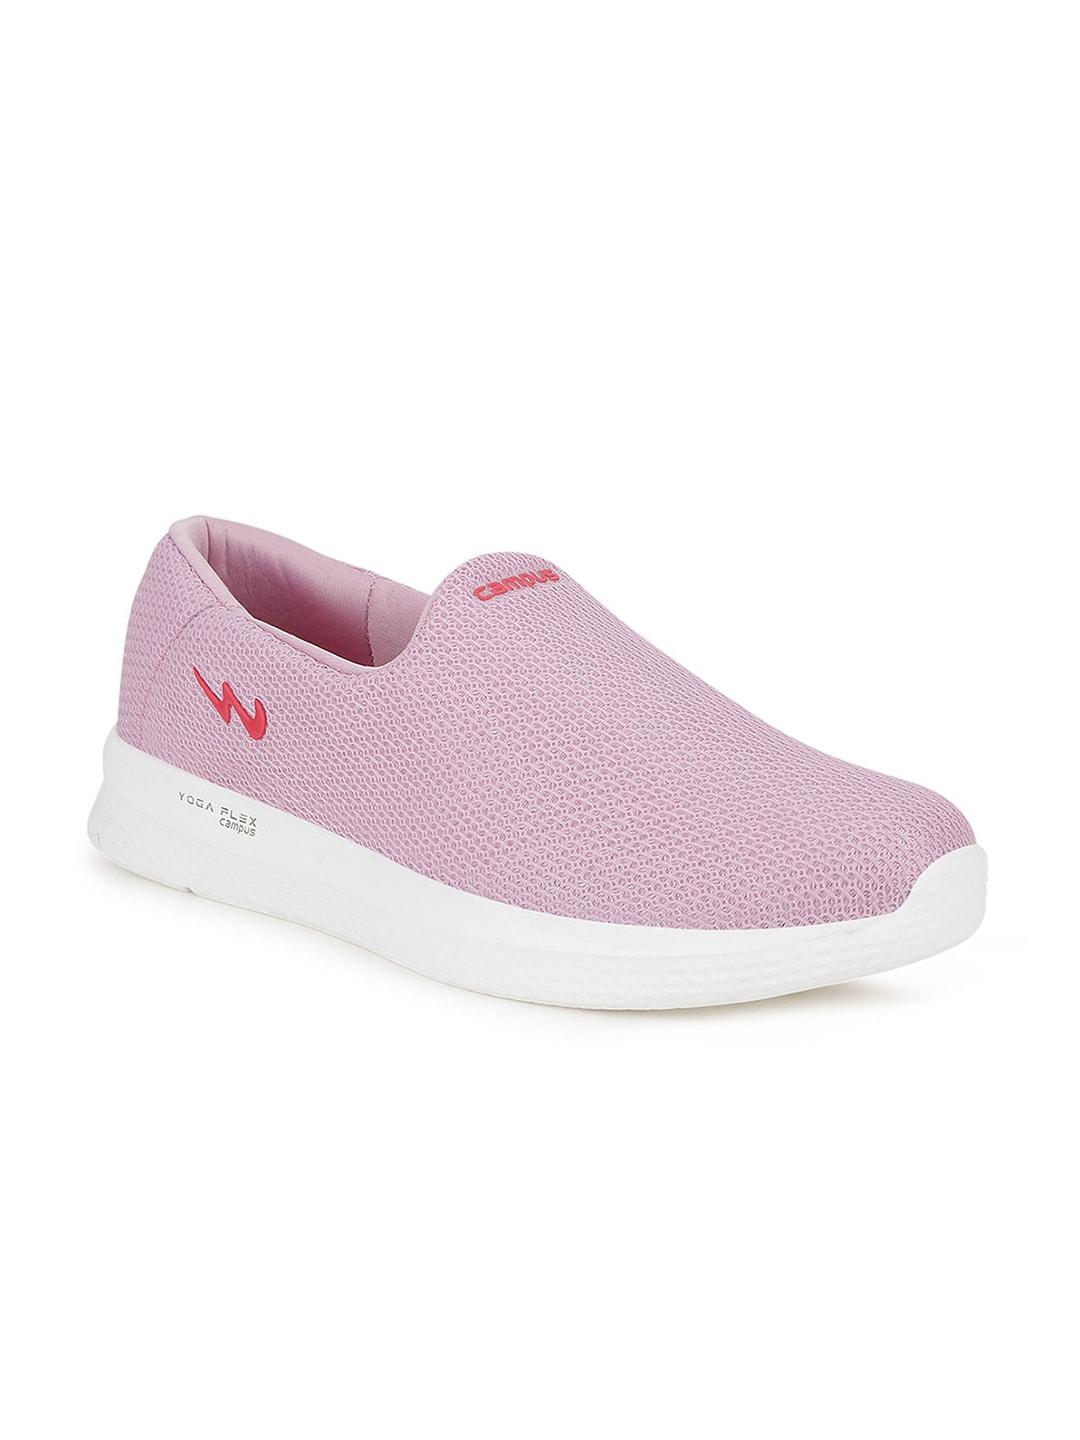 campus-women-pink-slip-on-sneakers